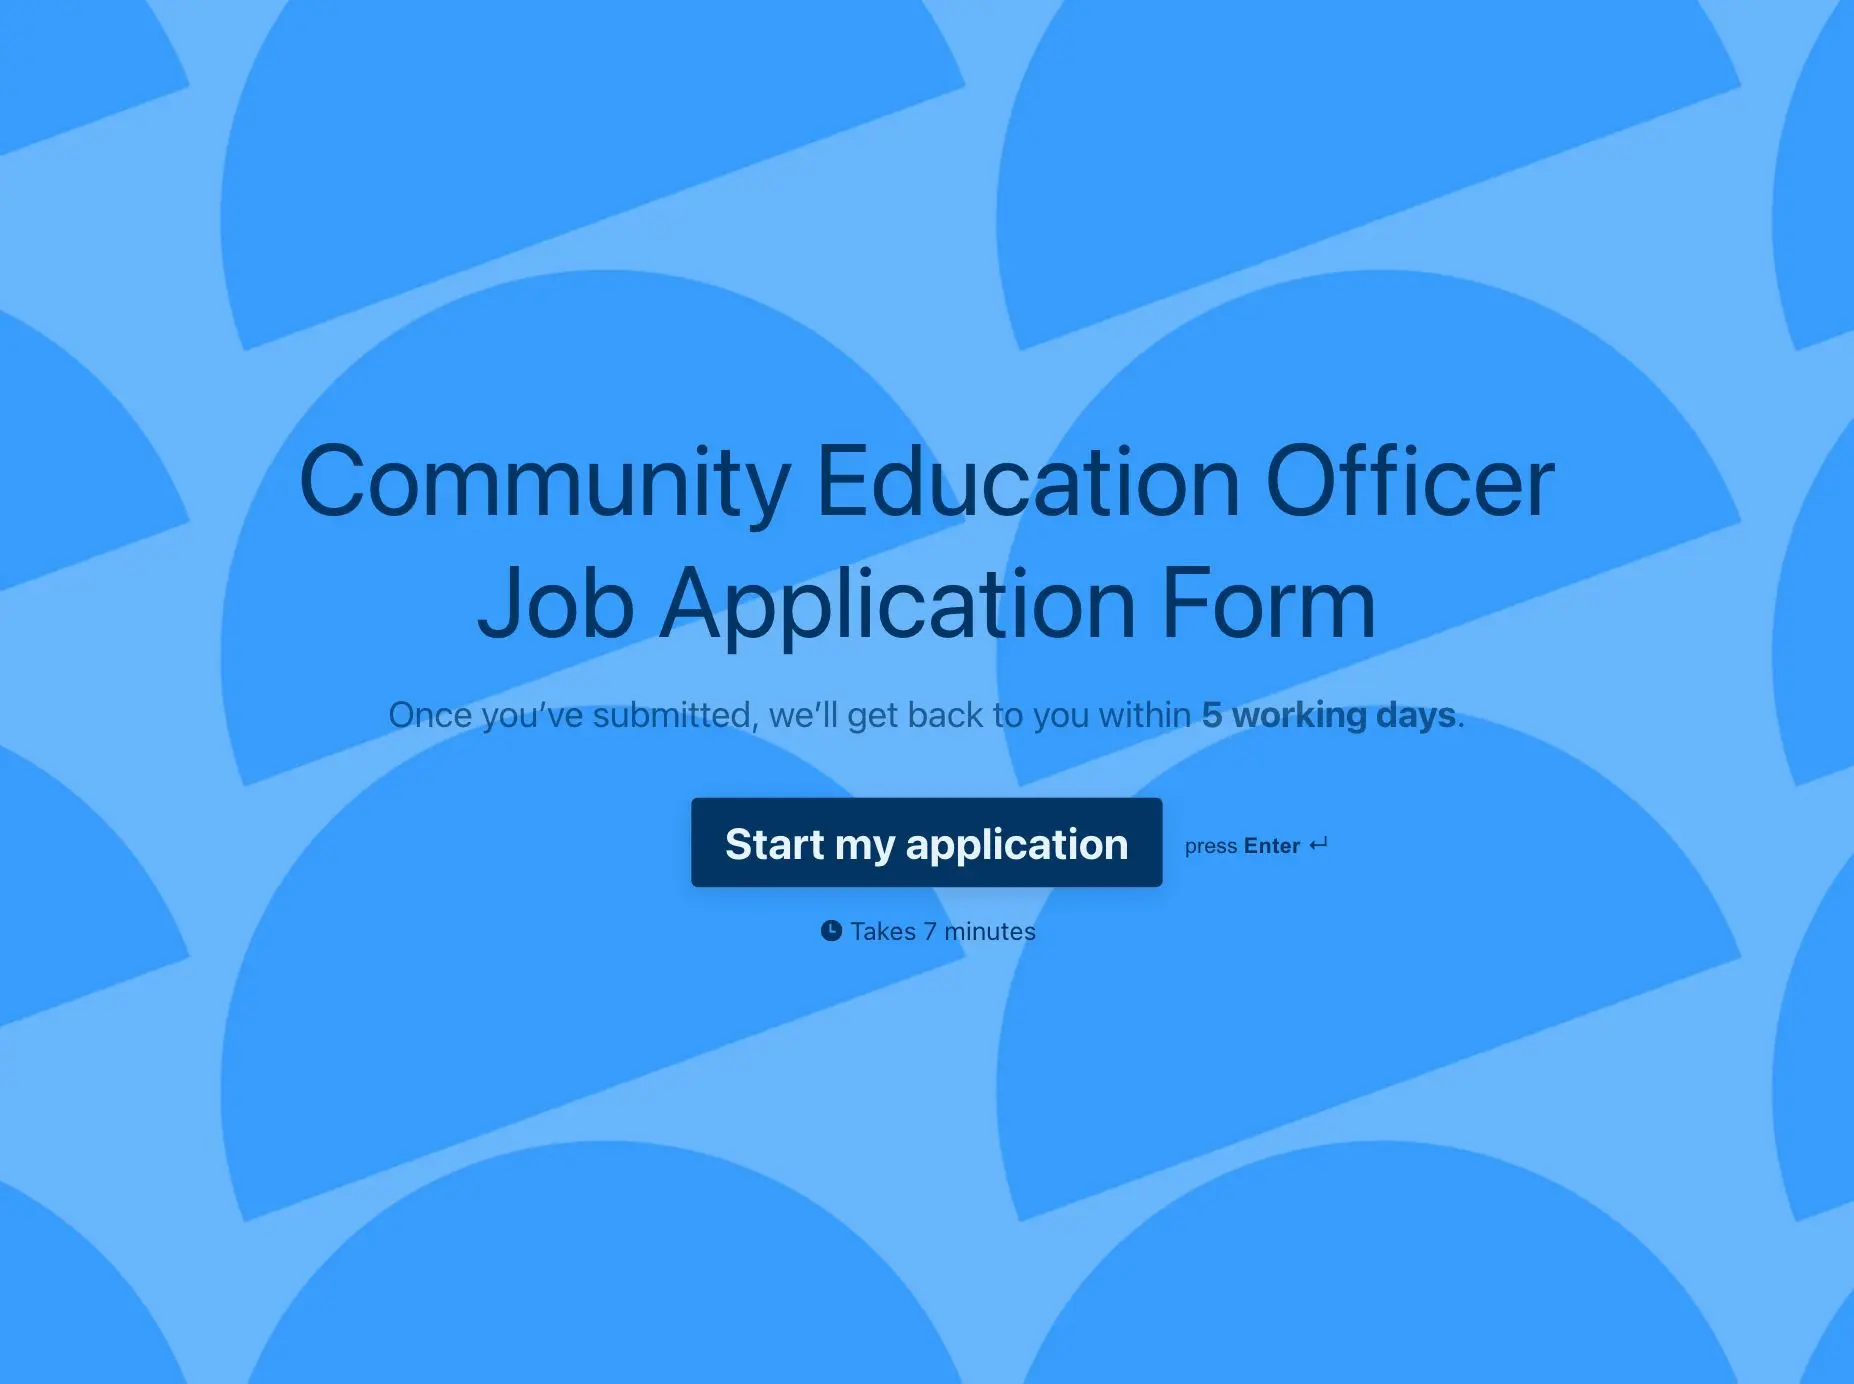 Community Education Officer Job Application Form Template Hero